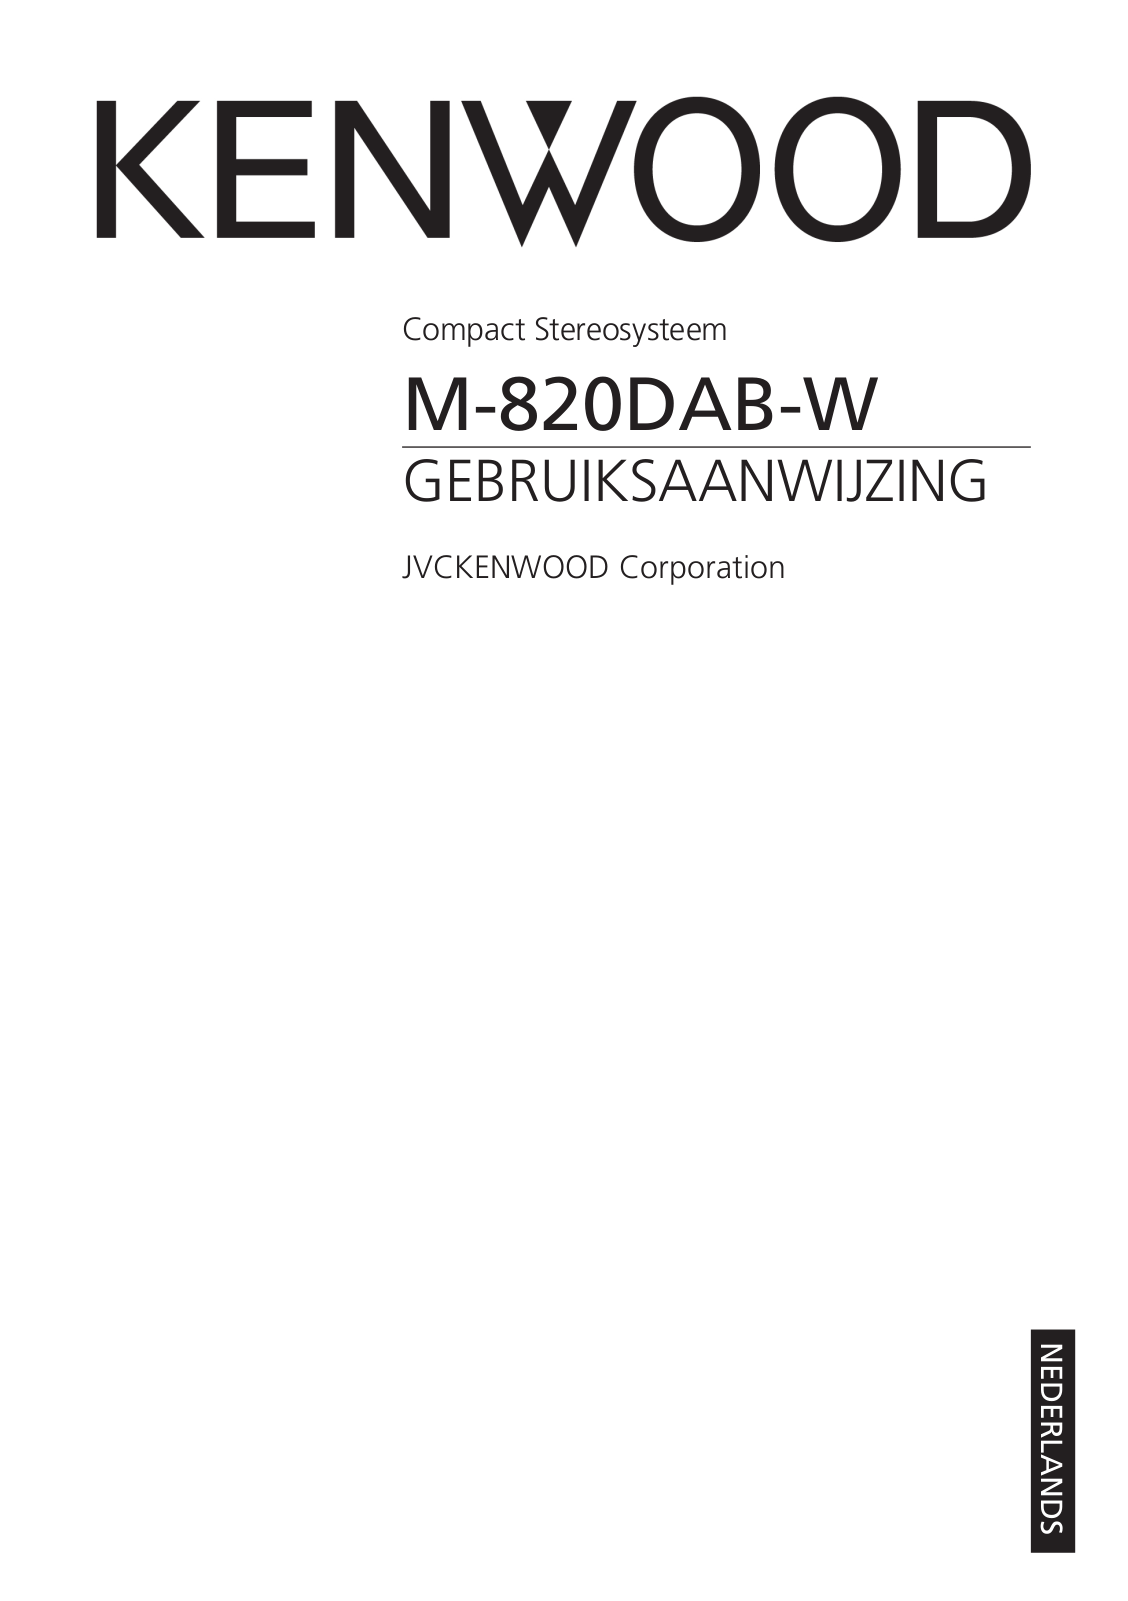 KENWOOD M-820DAB-W User Manual